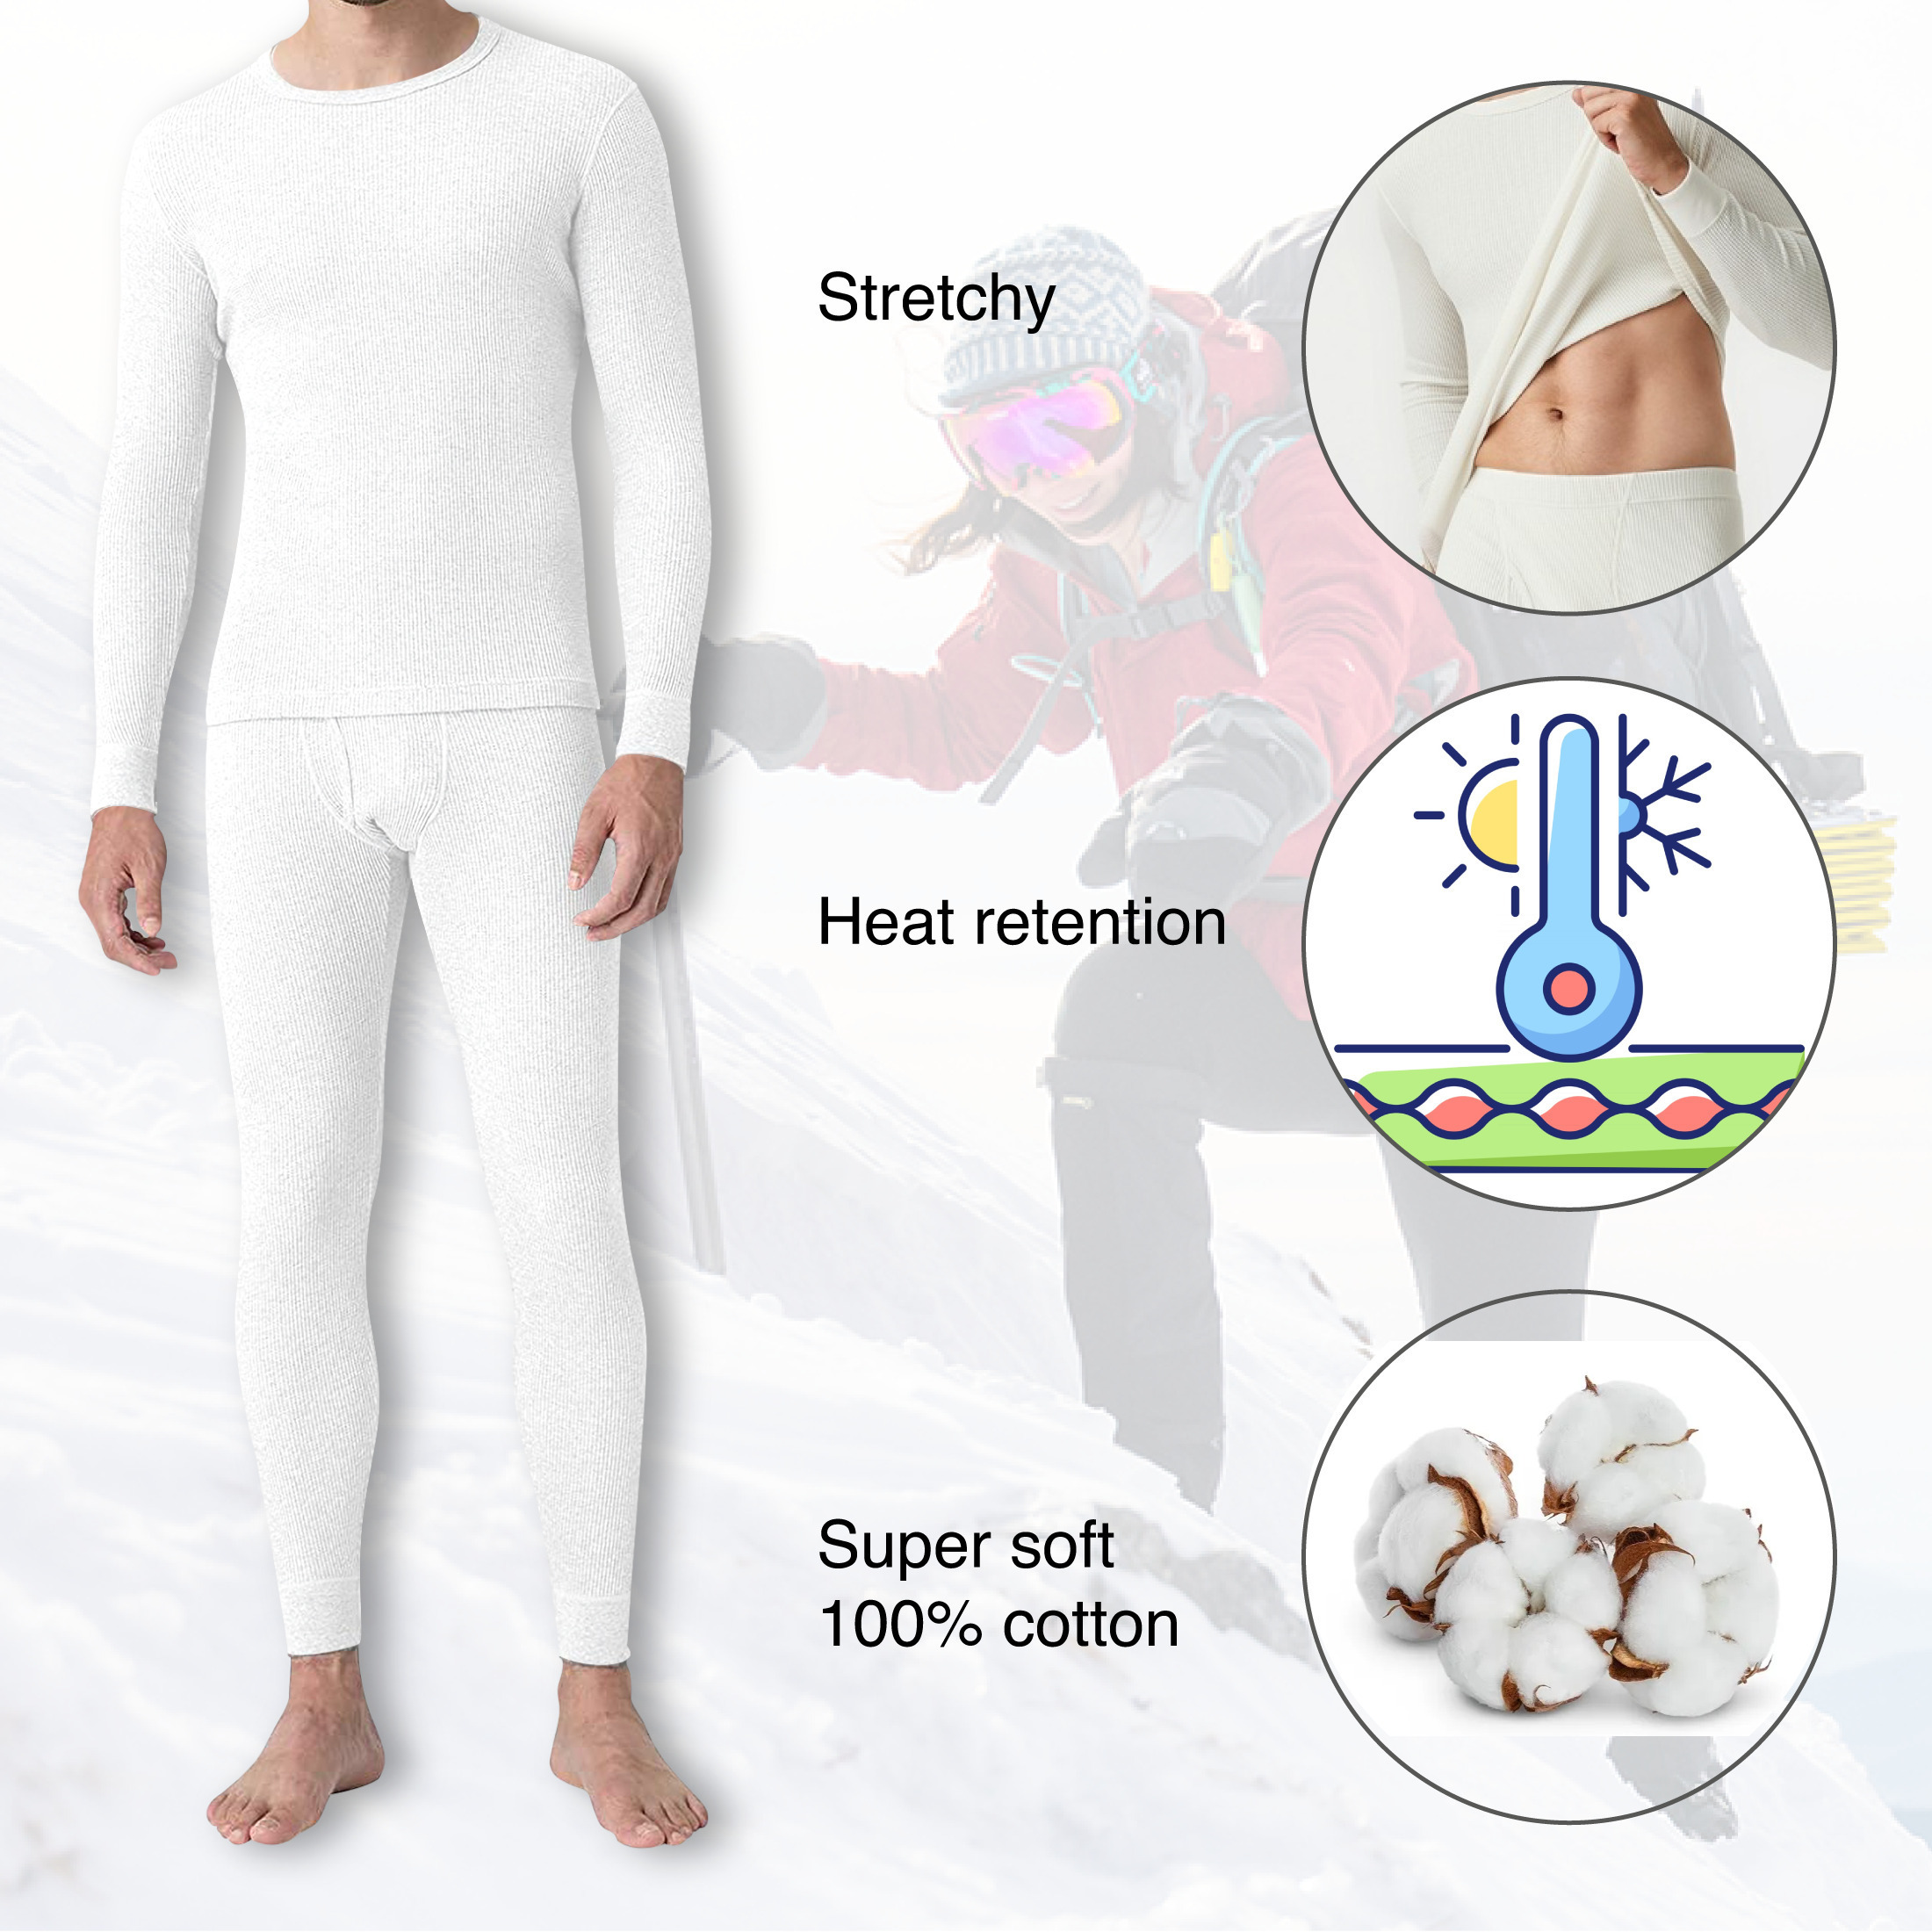 2-Sets: Men's Super Soft Cotton Waffle Knit Winter Thermal Underwear Set - Grey & Navy, X-Large